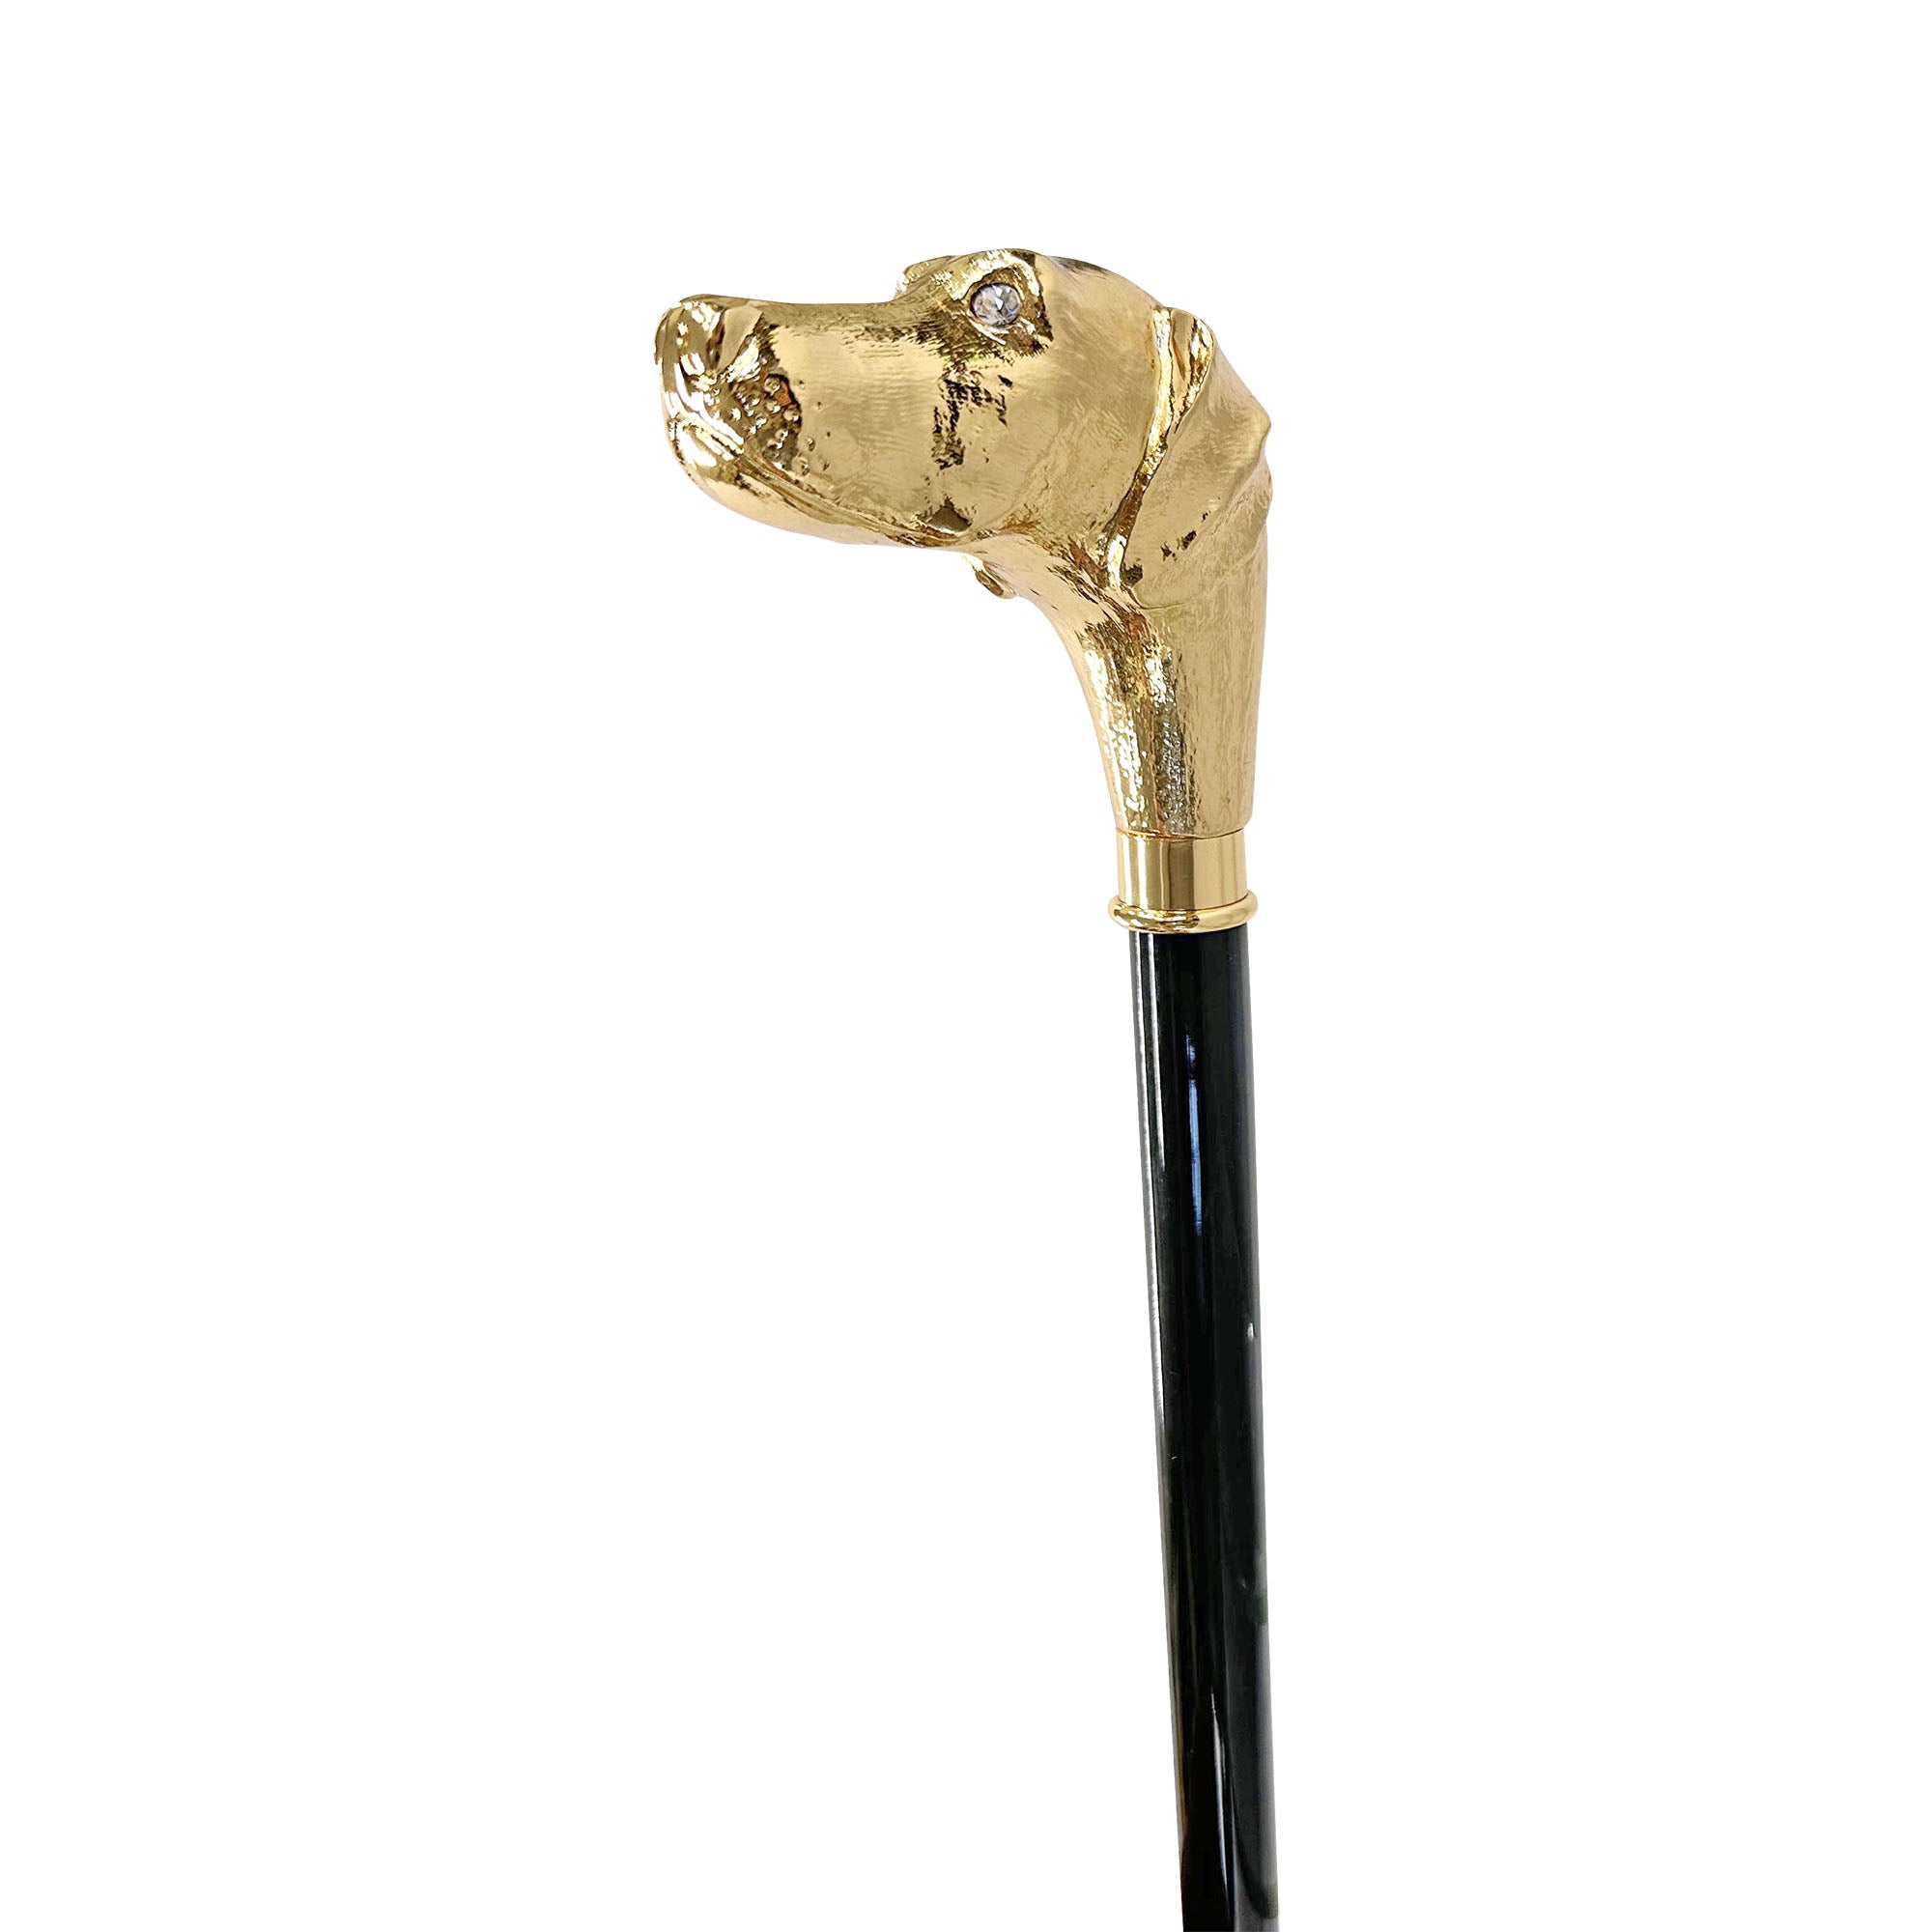 Handmade Pointer dog Walking stick - 24K gold-plated